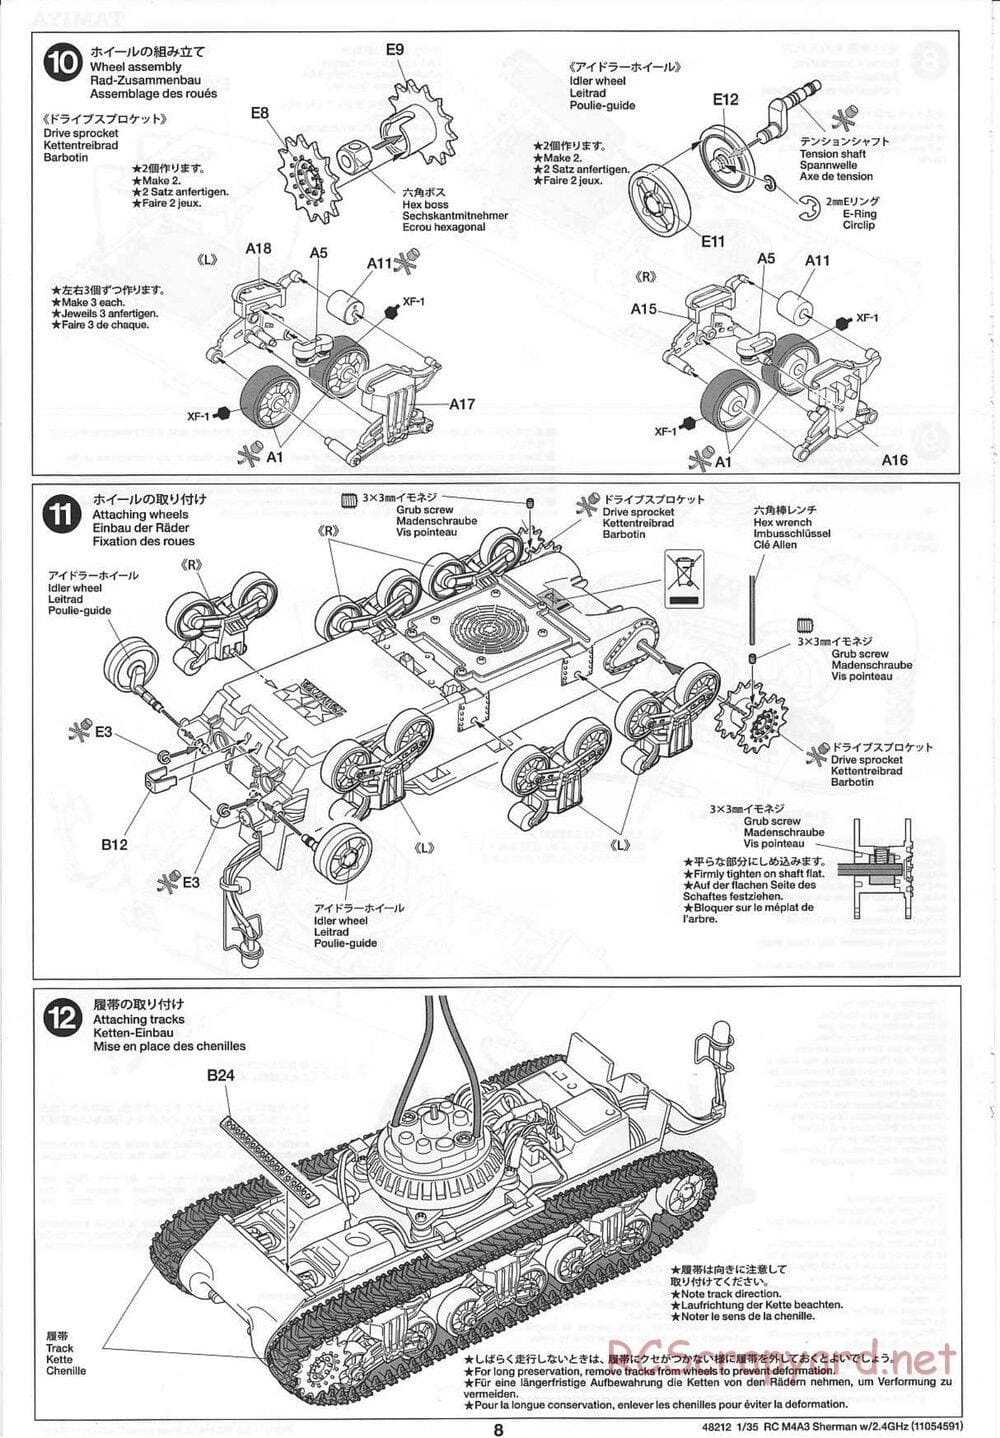 Tamiya - US Medium Tank M4A3 Sherman - 1/35 Scale Chassis - Manual - Page 8